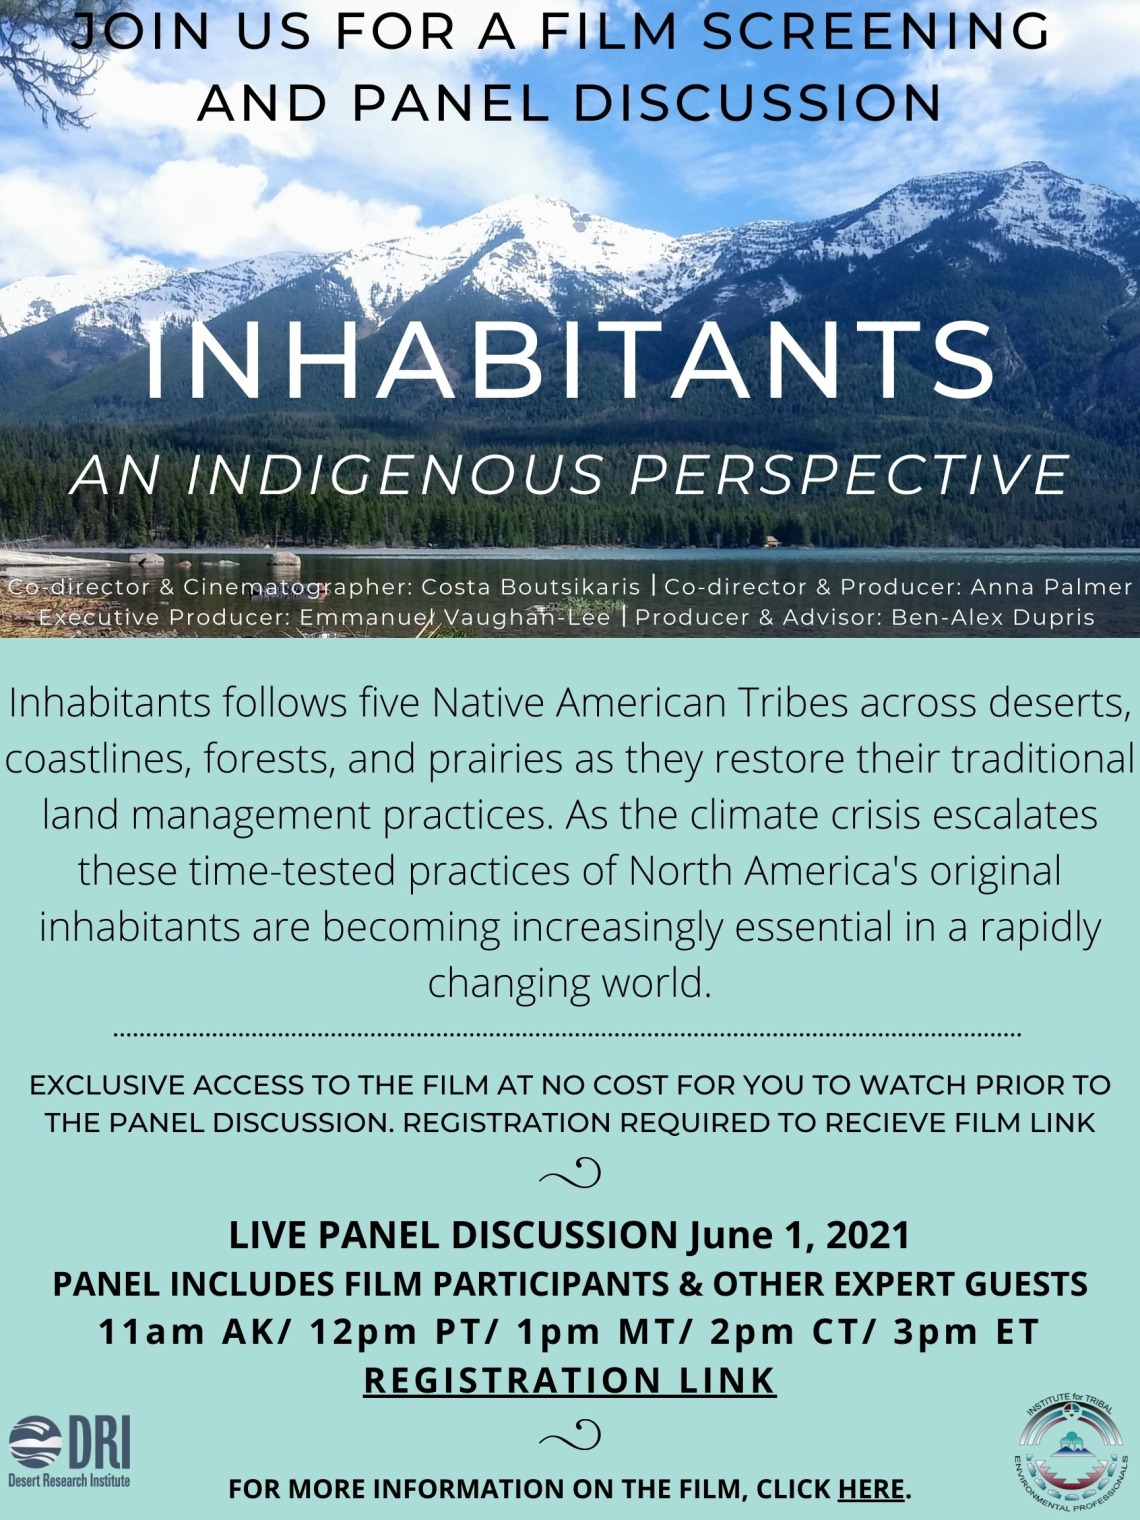 Flyer for Inhabitants: An Indigenous Perspective film screening.